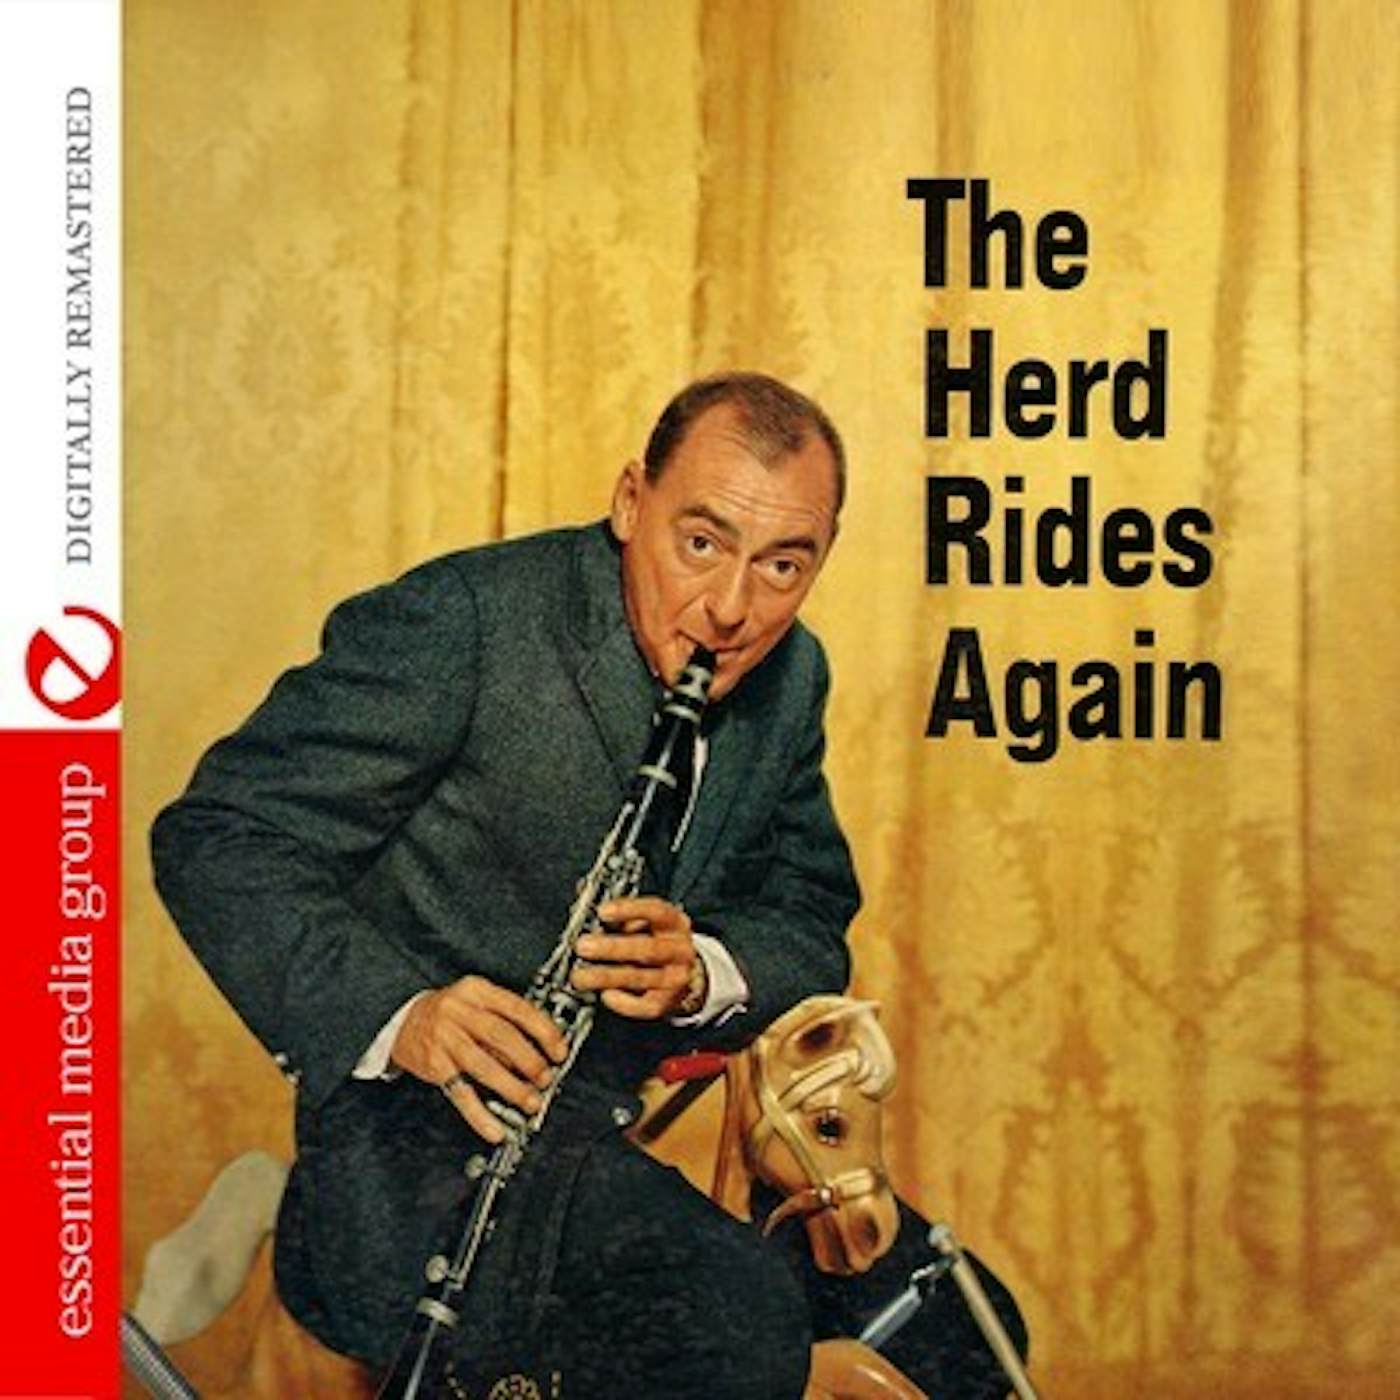 Woody Herman HERD RIDES AGAIN CD